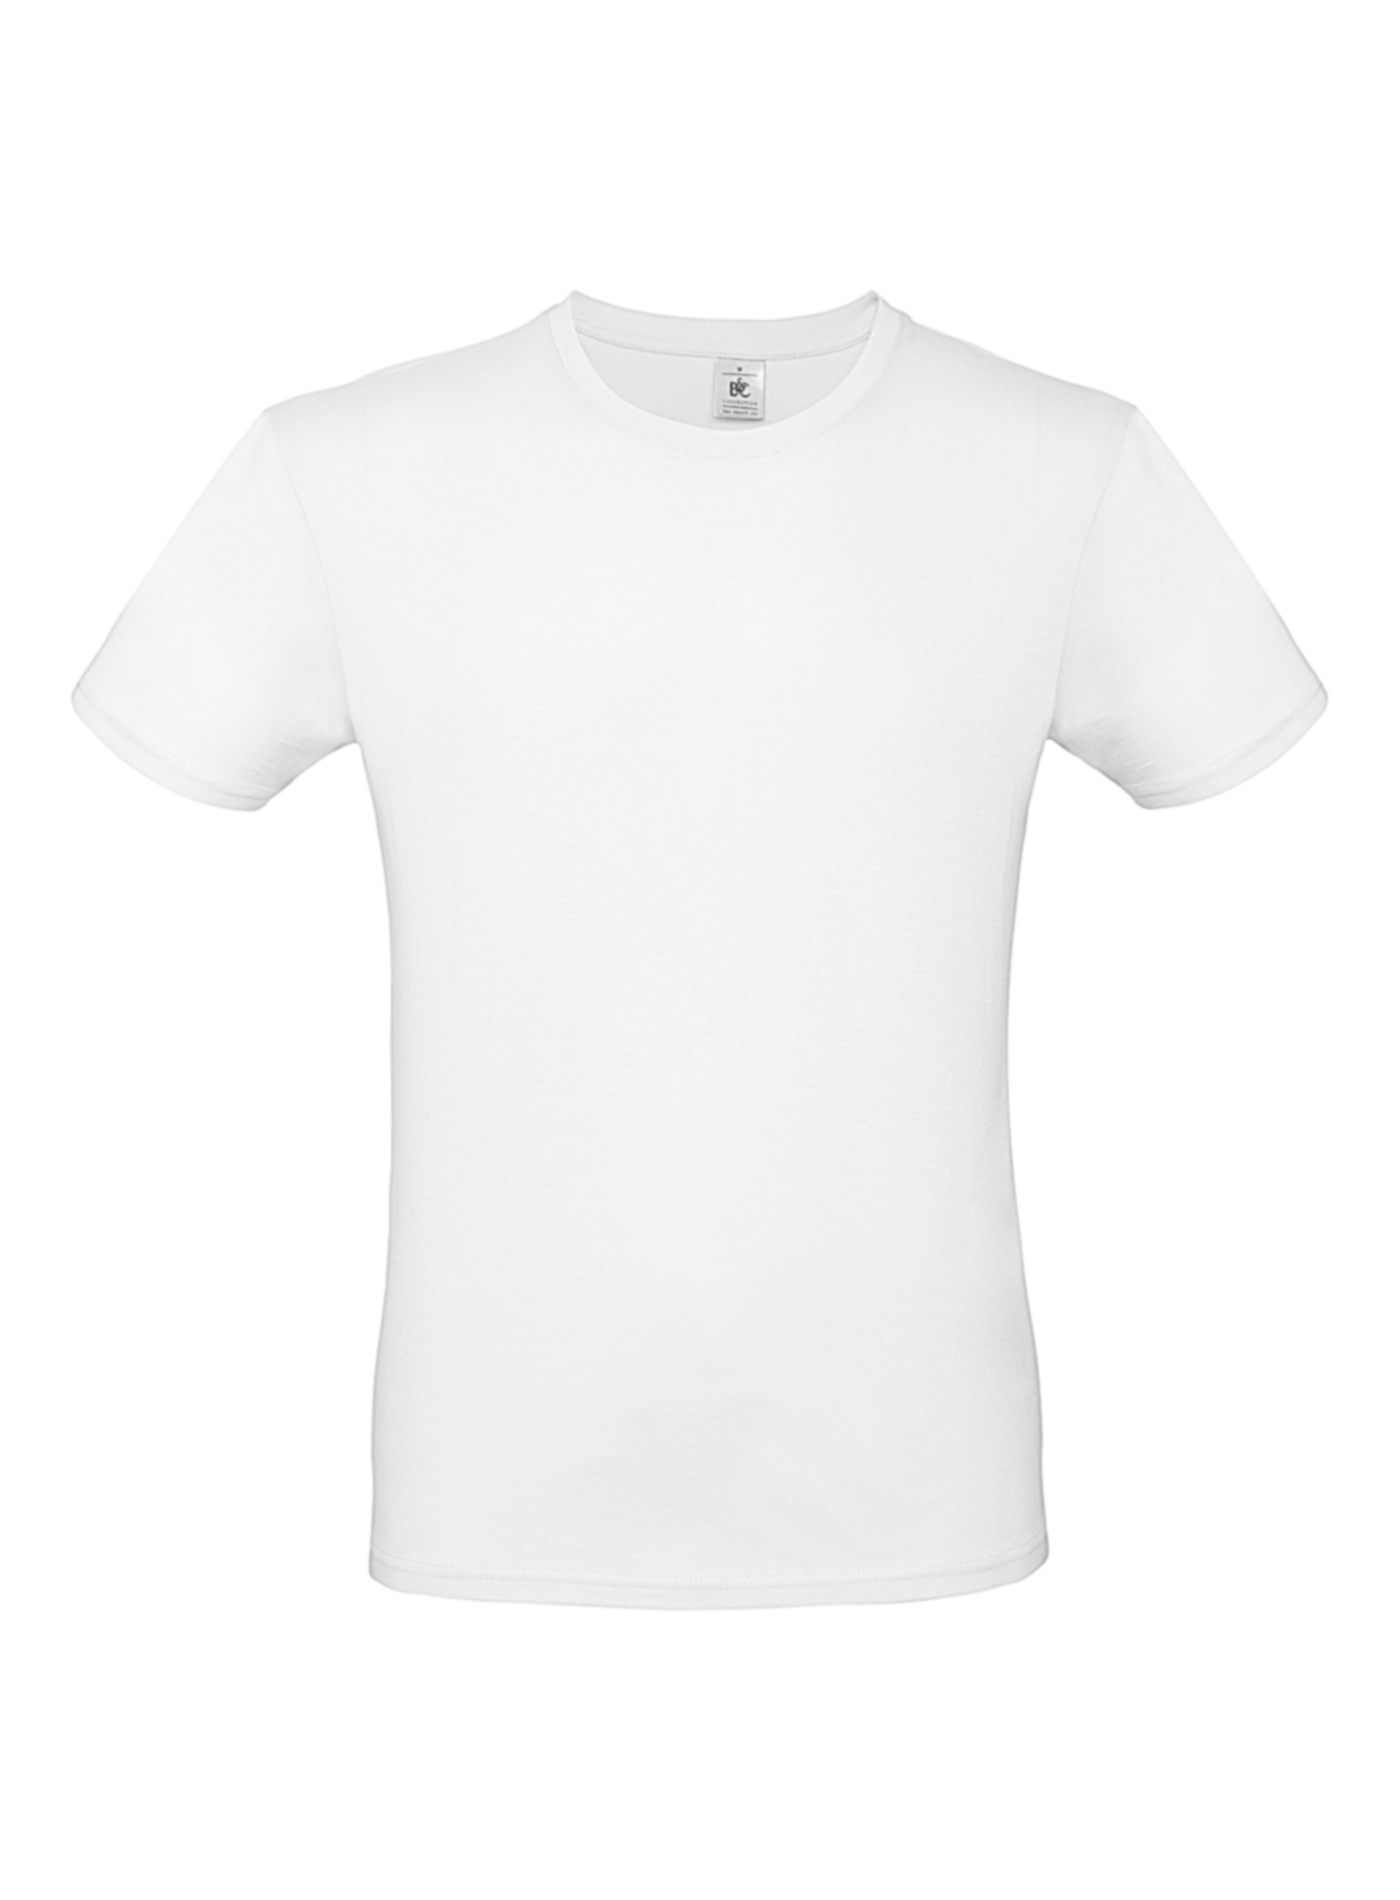 Pánské tričko B&C - Bílá M